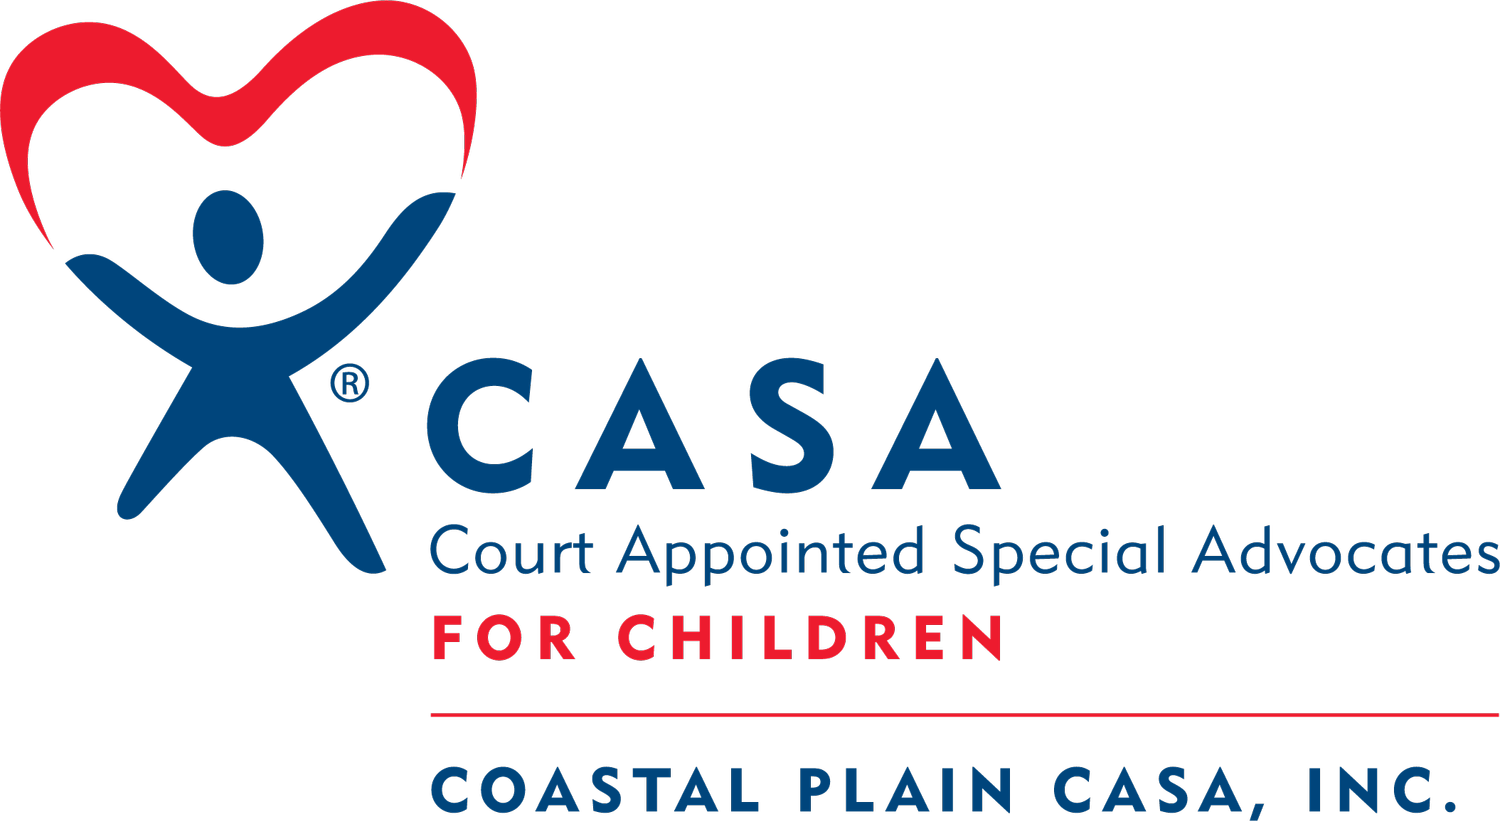 Coastal Plain CASA